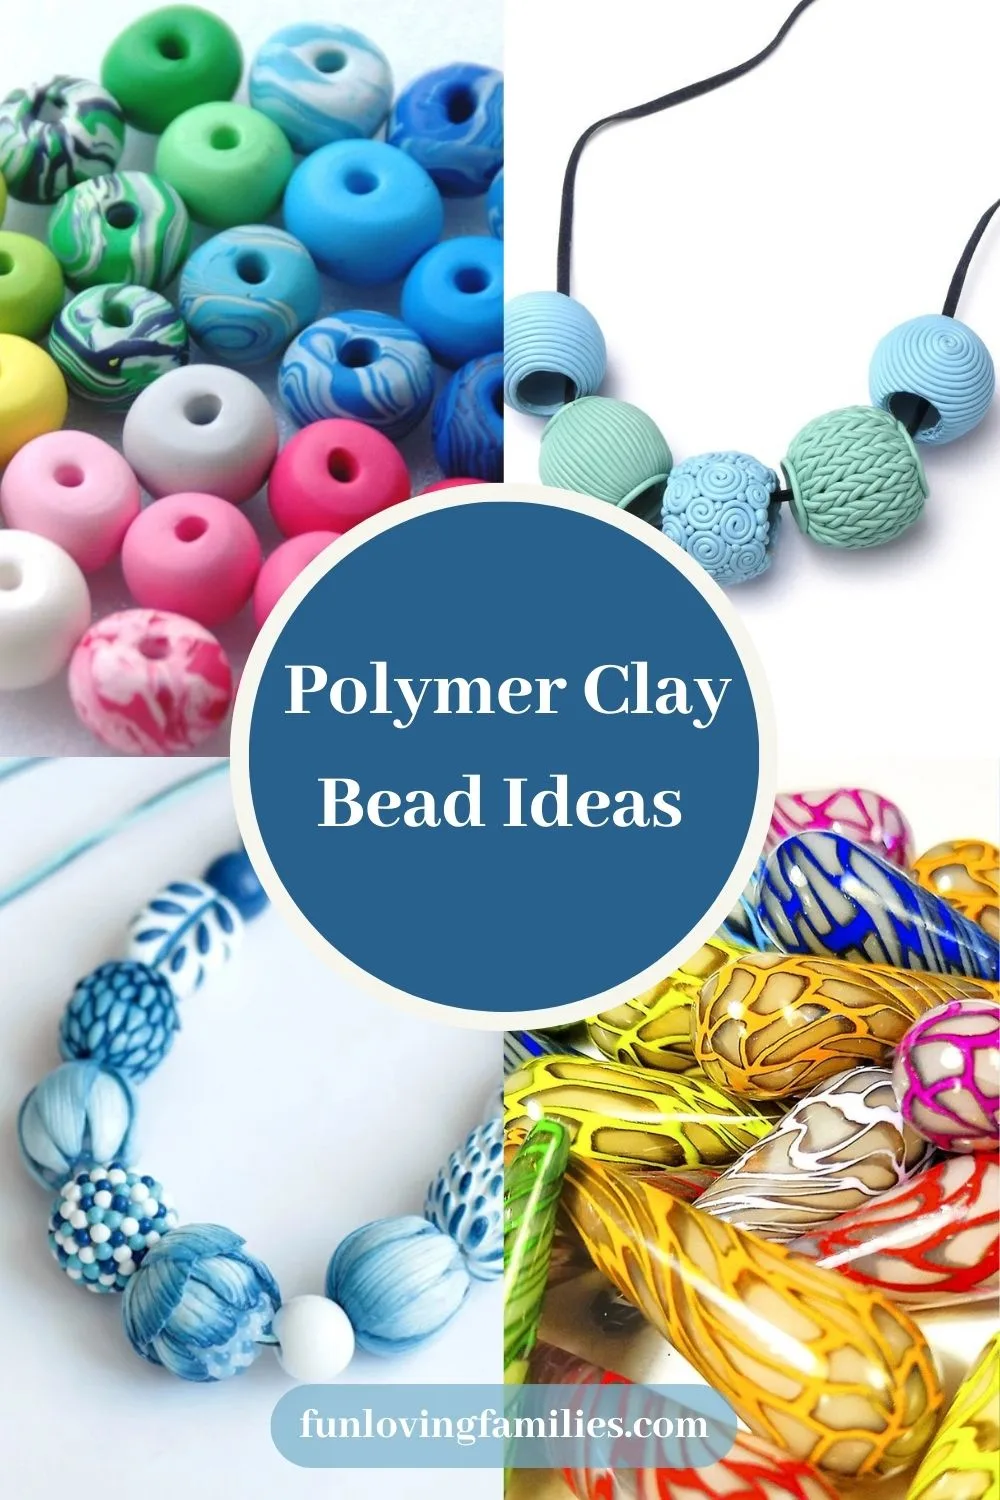 Polymer Clay Bead Ideas